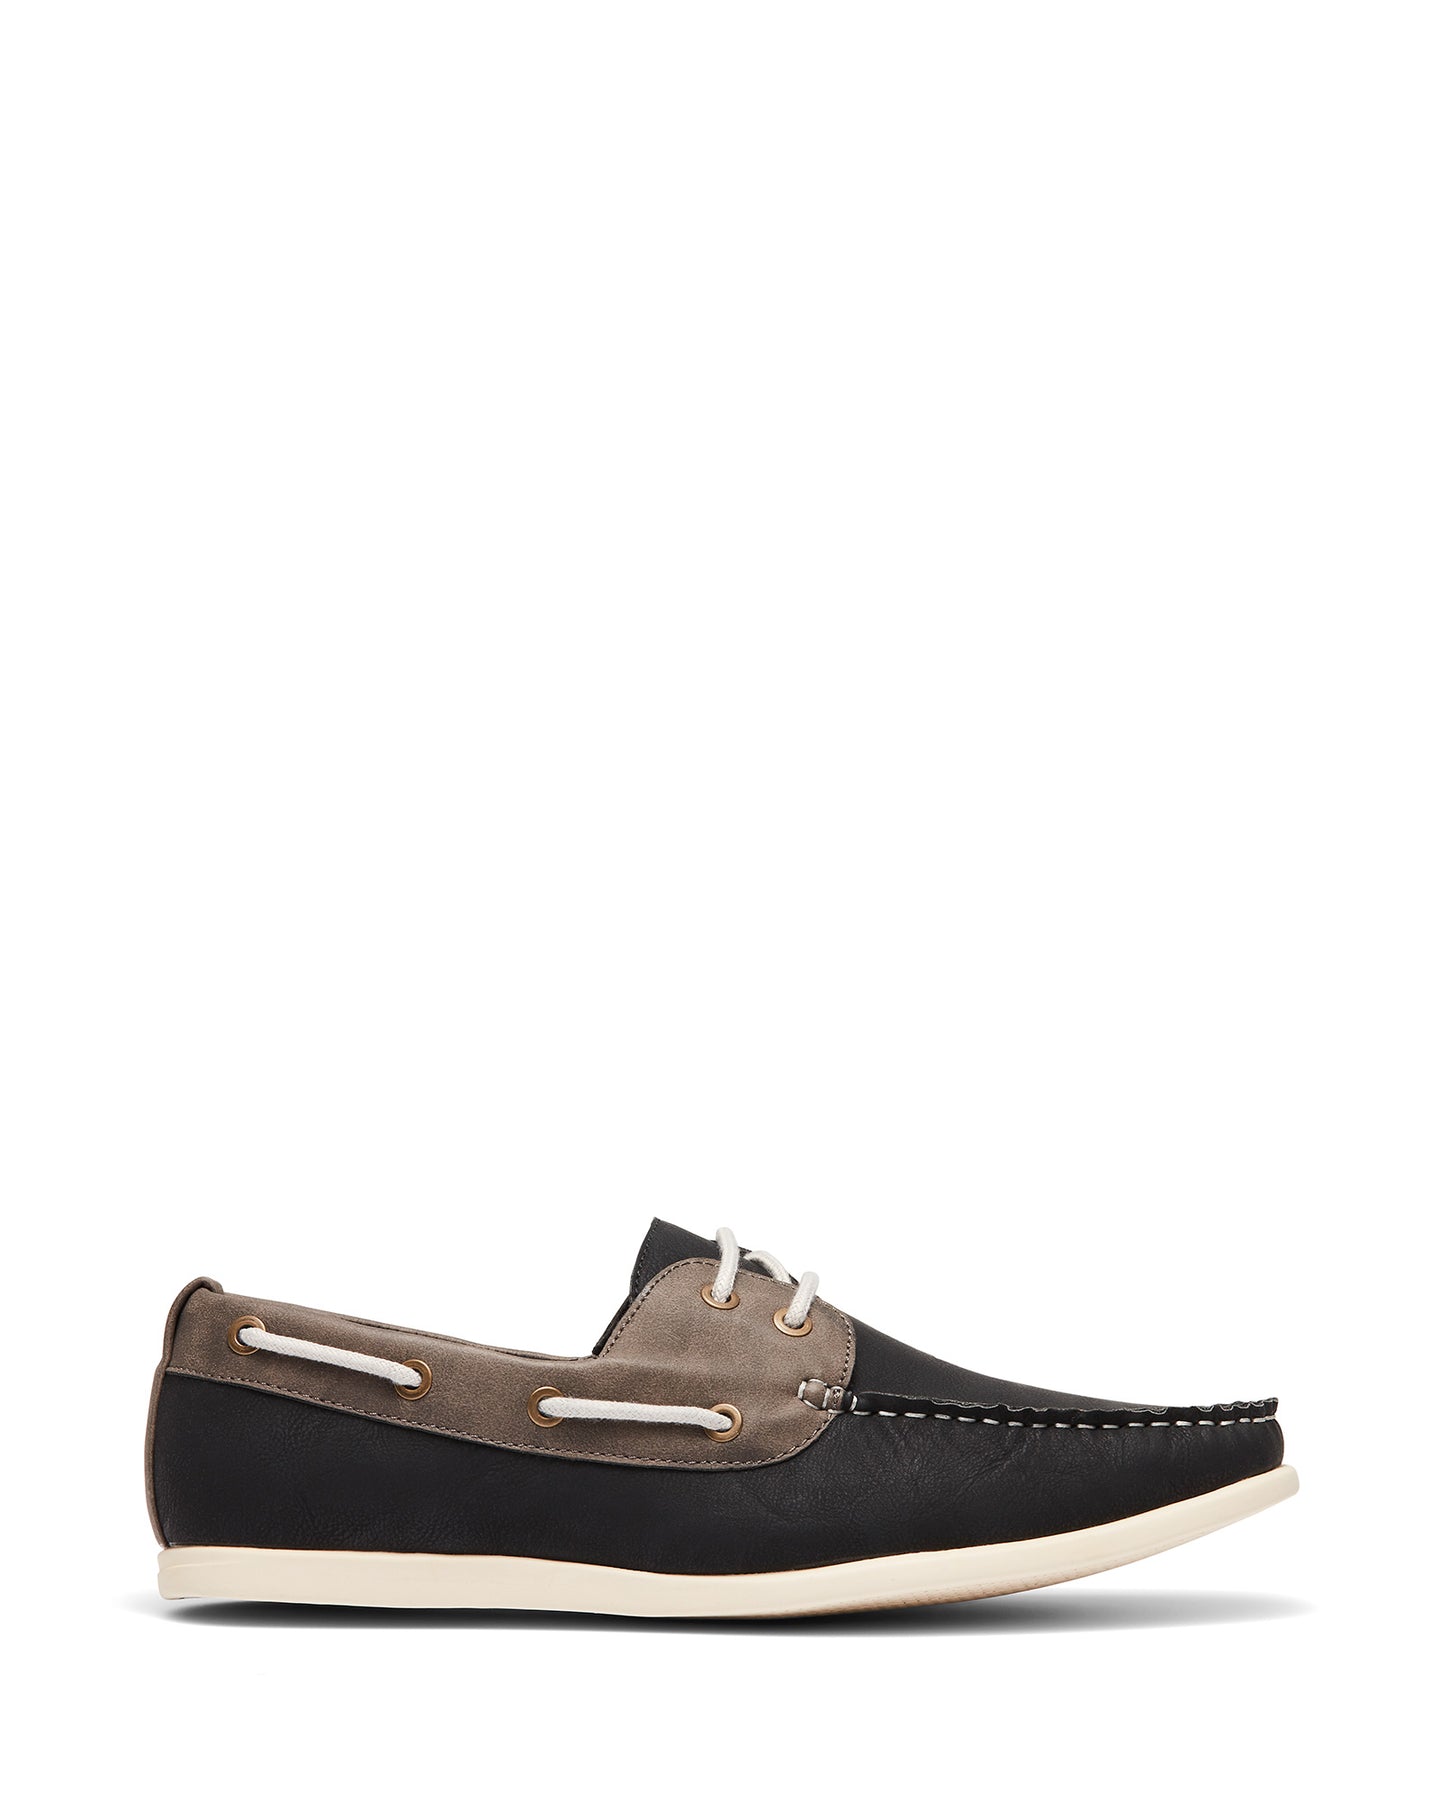 Uncut Shoes Abel Black/Grey | Men's Boat Shoe | Deck Shoe | Loafer 